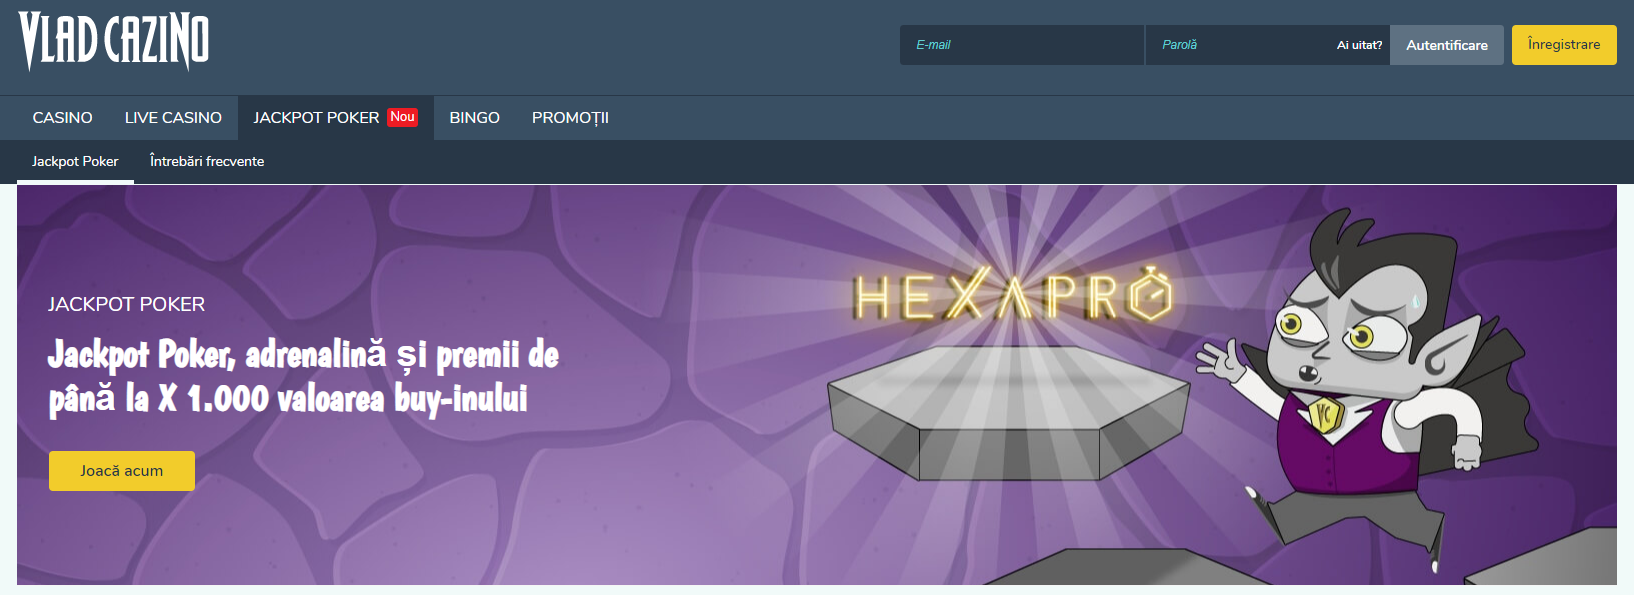 Промо-страница турниров HexaPro в румынском казино VladCasino